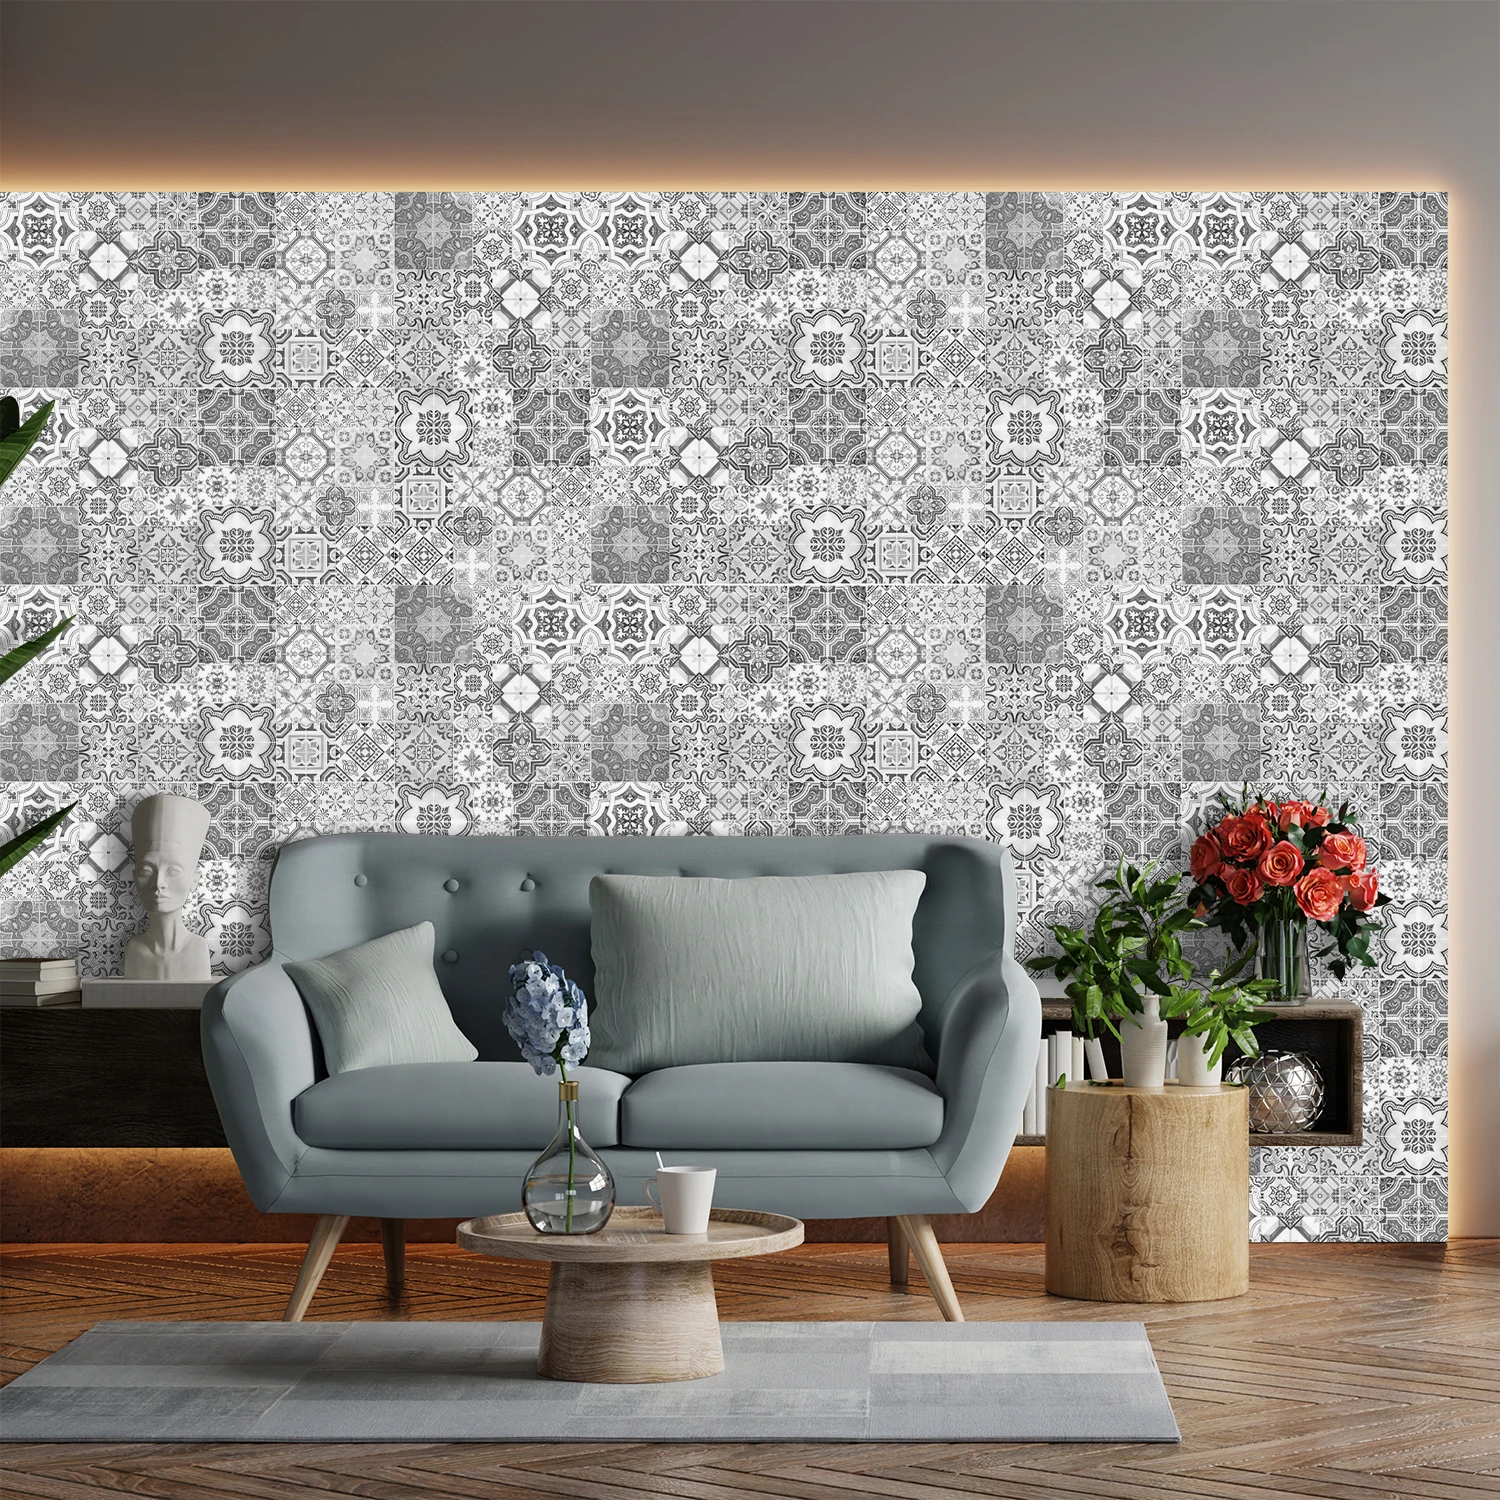 

DIY Three-In-One Creative Ceramic Tile Wall Paste Kitchen Bathroom Living Room Decorative Sticker Waterproof Oil-Proof Retro Eur